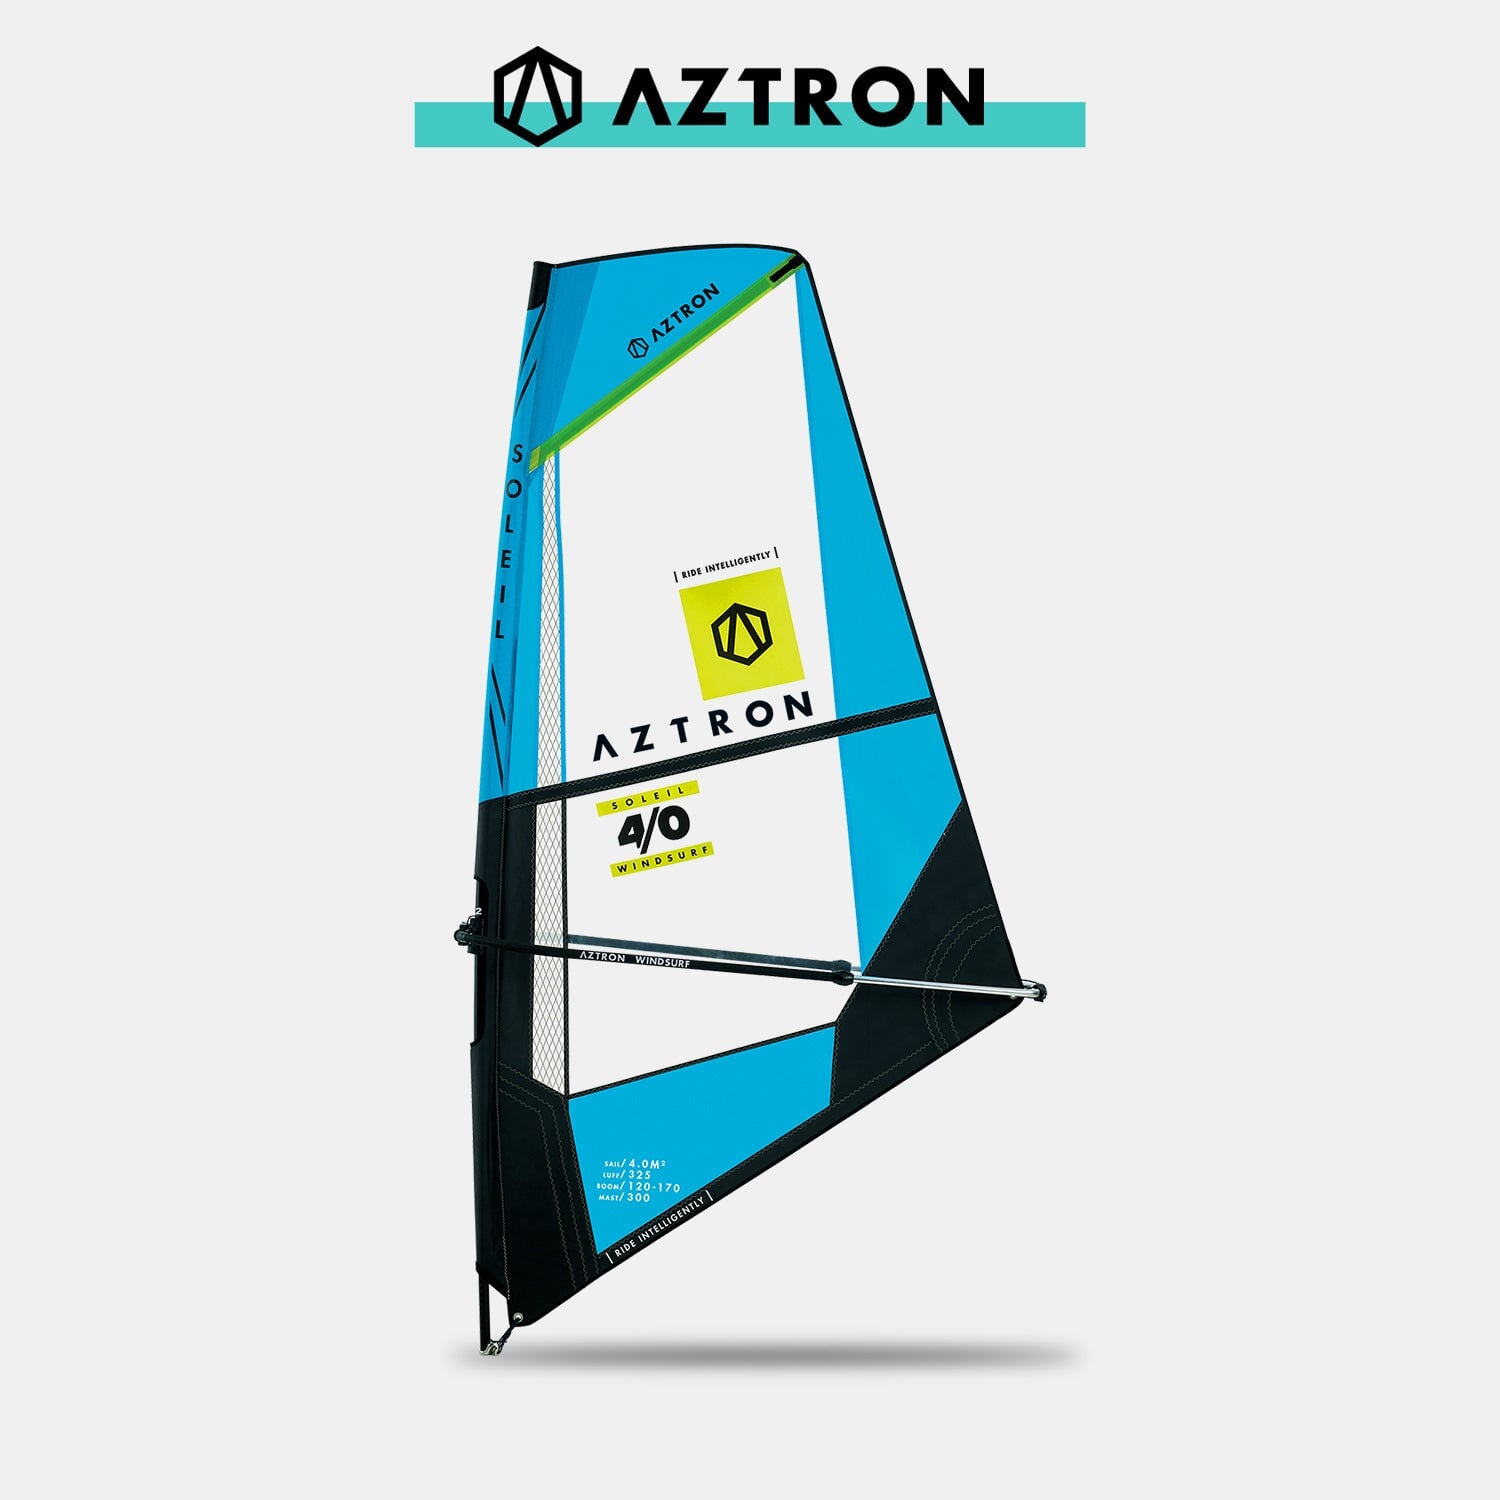 AZTRON Sail Rig 4.0